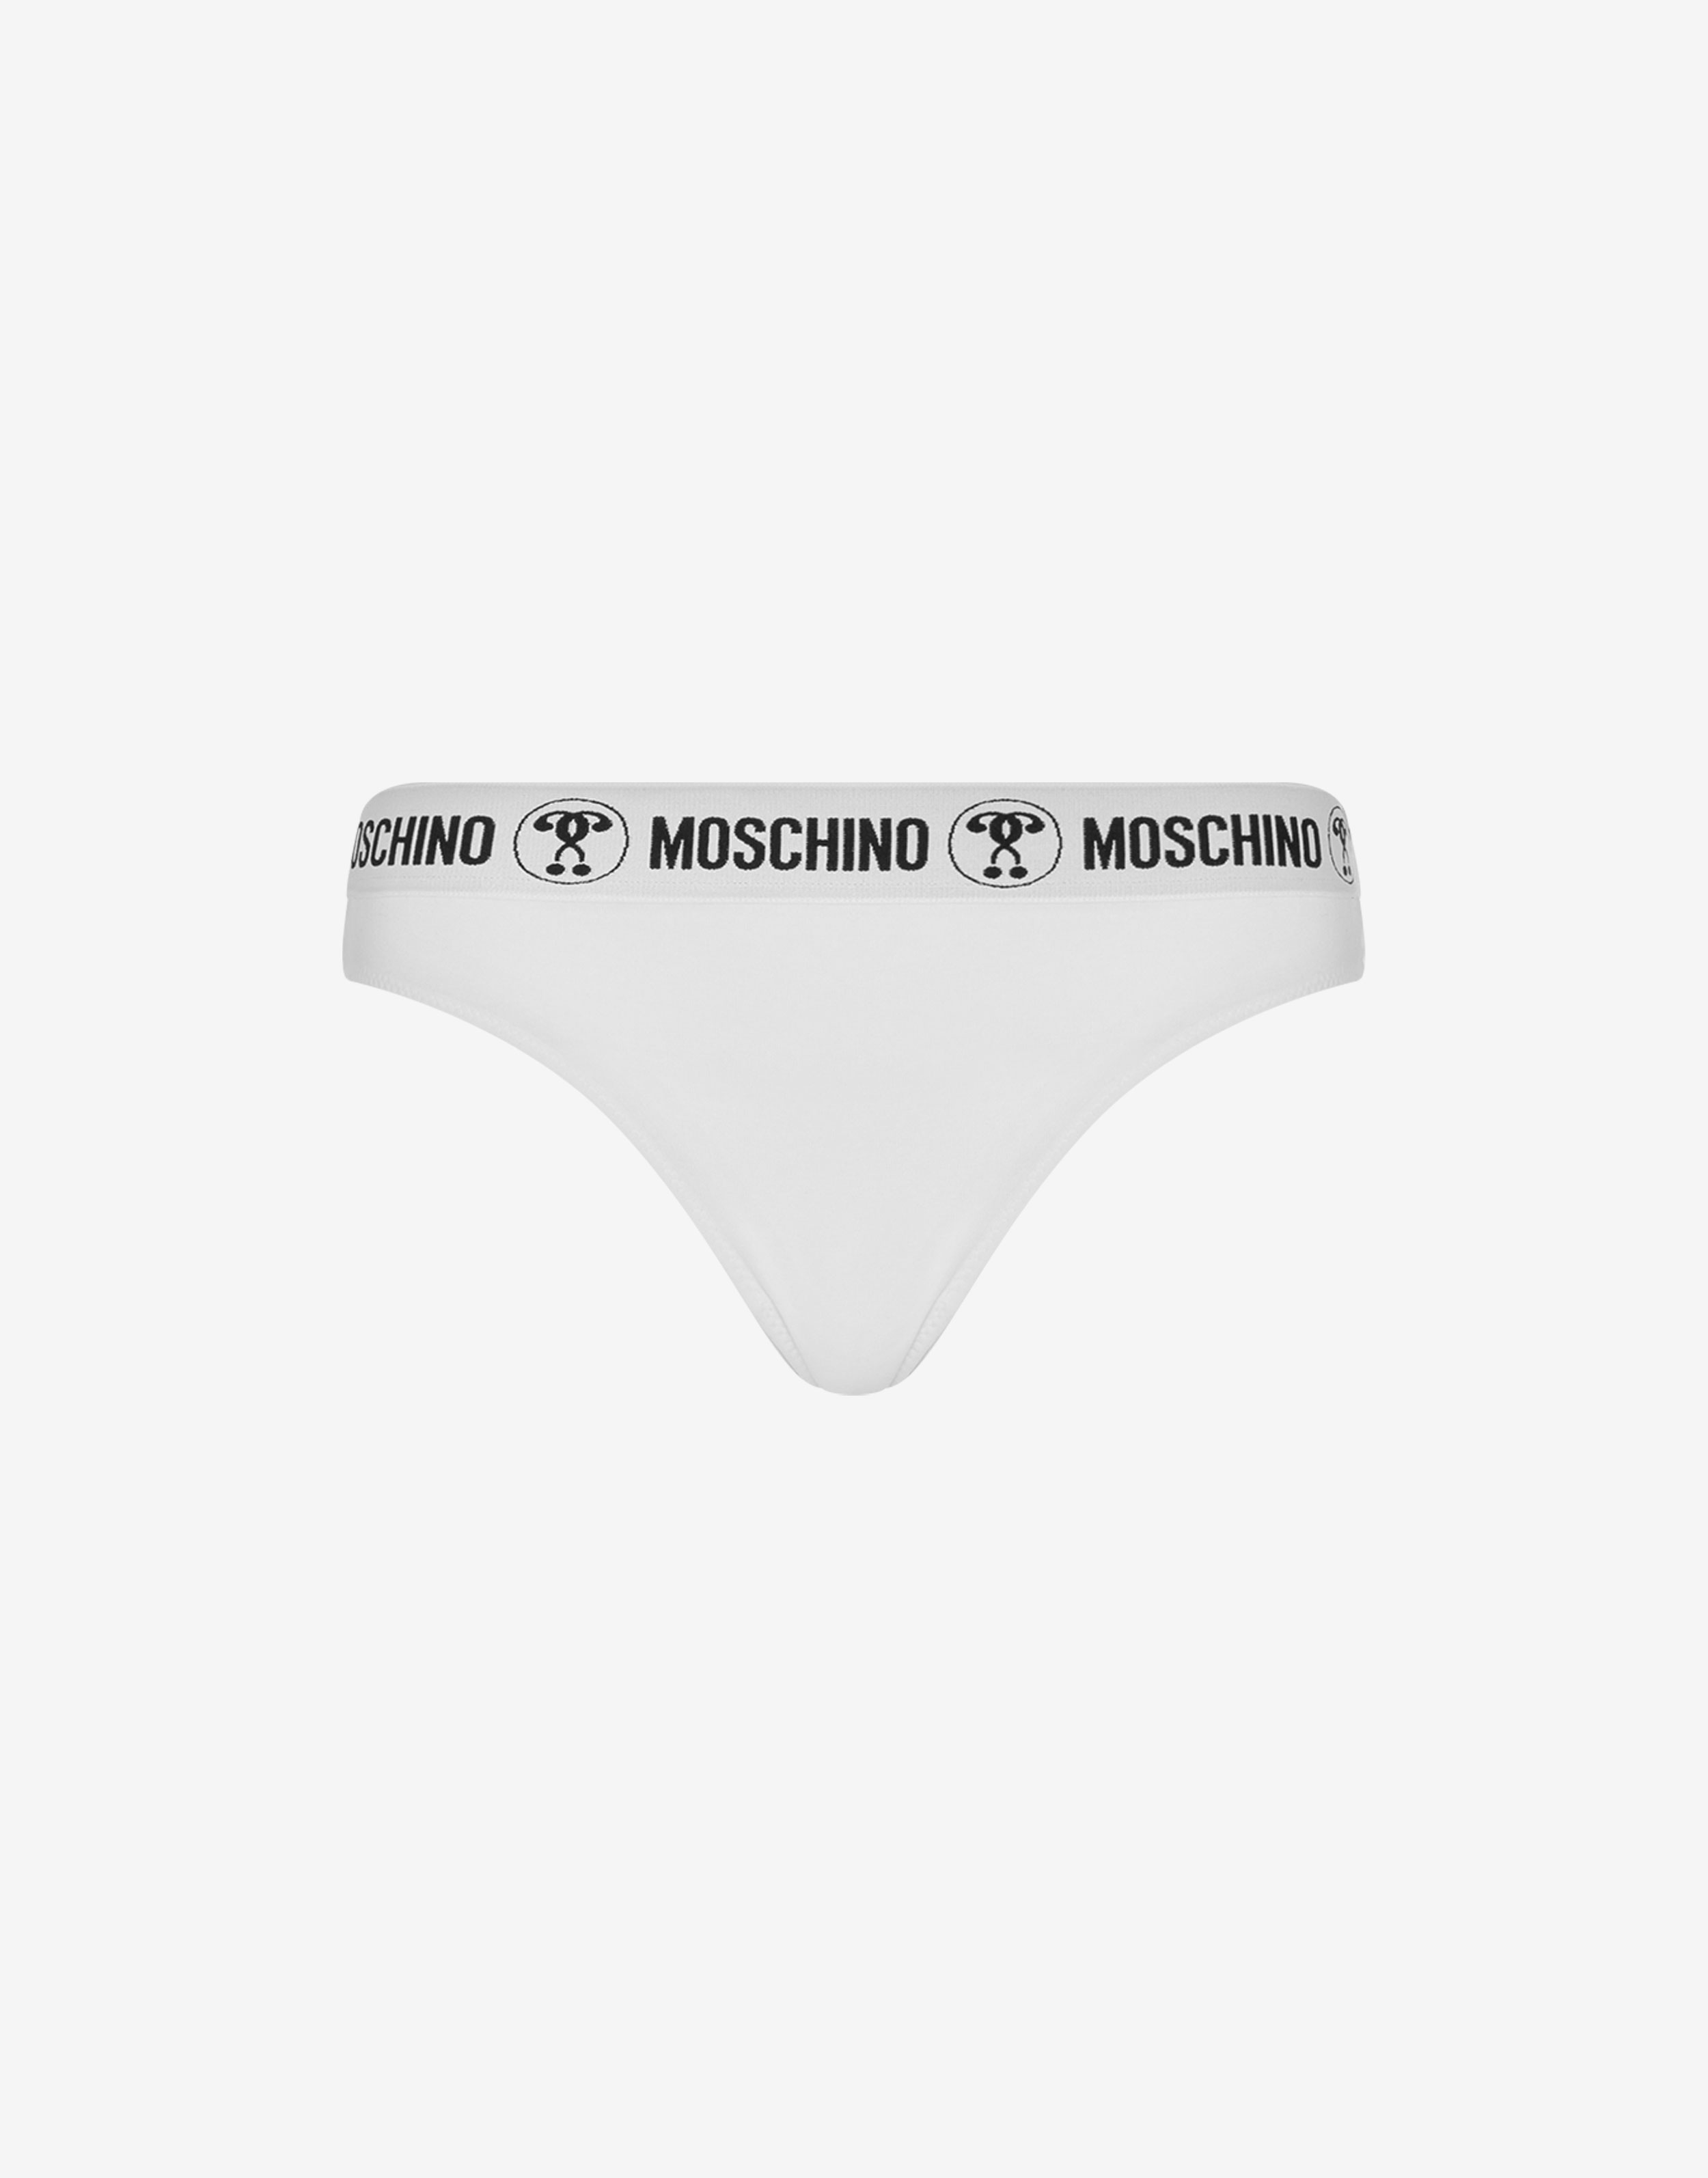 Moschino Underwear Women's Black Bra I at FORZIERI